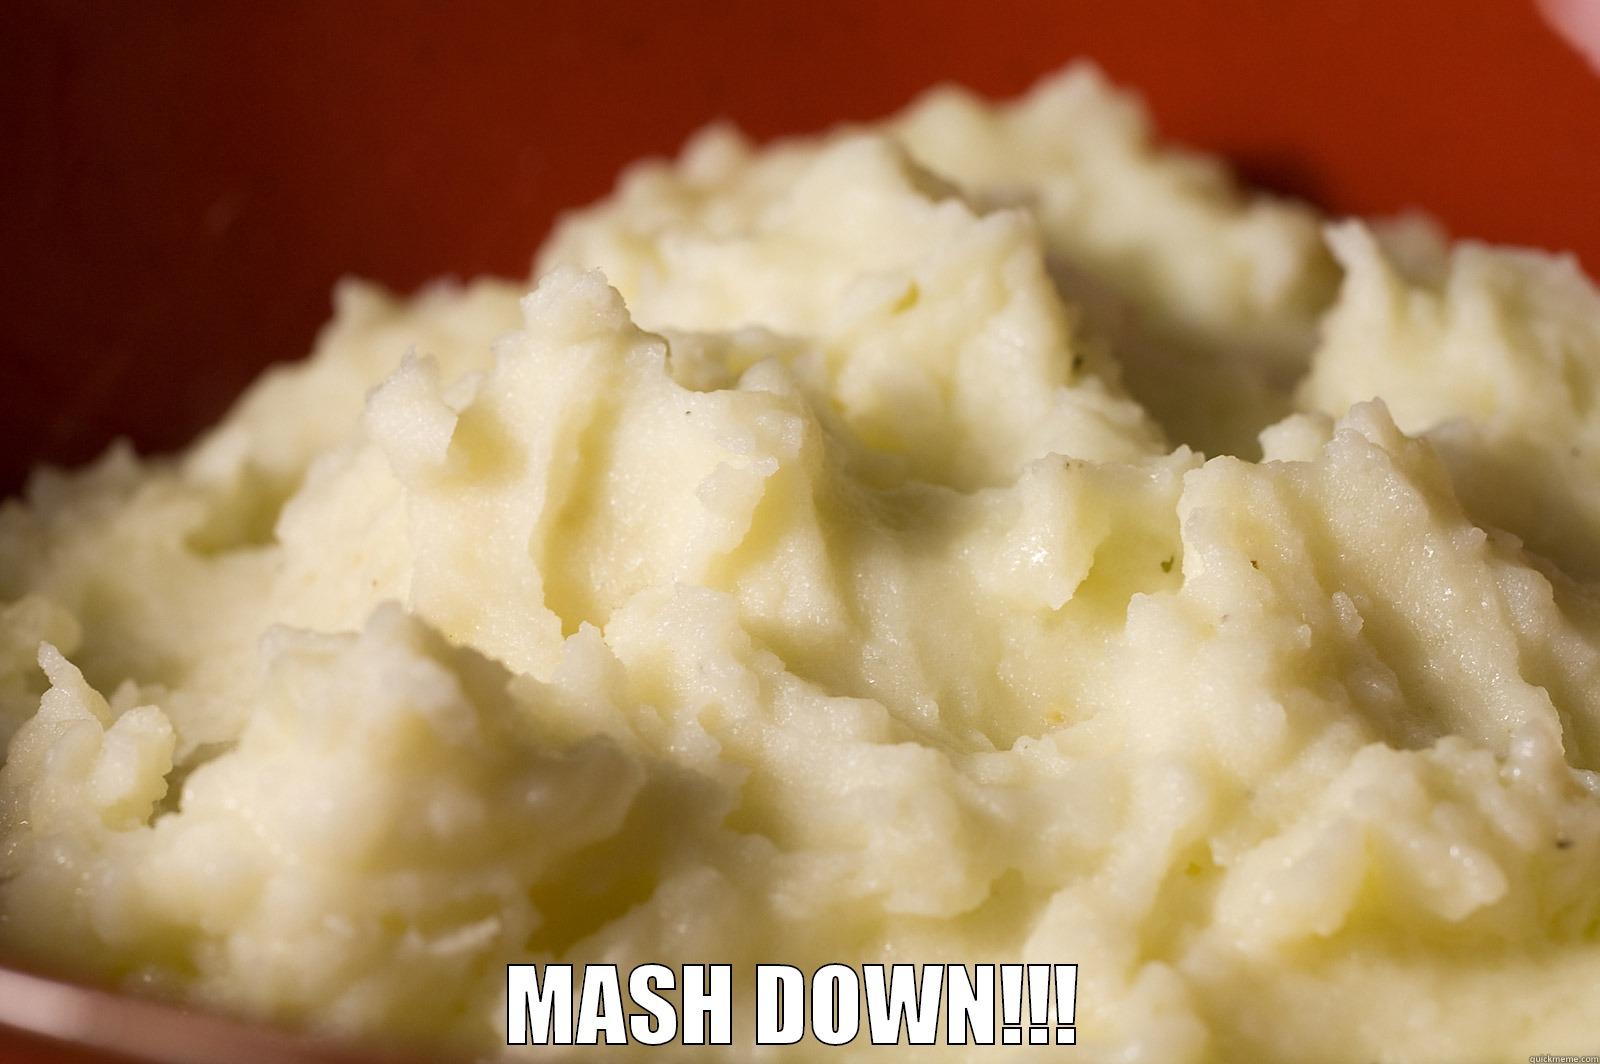  MASH DOWN!!! Misc